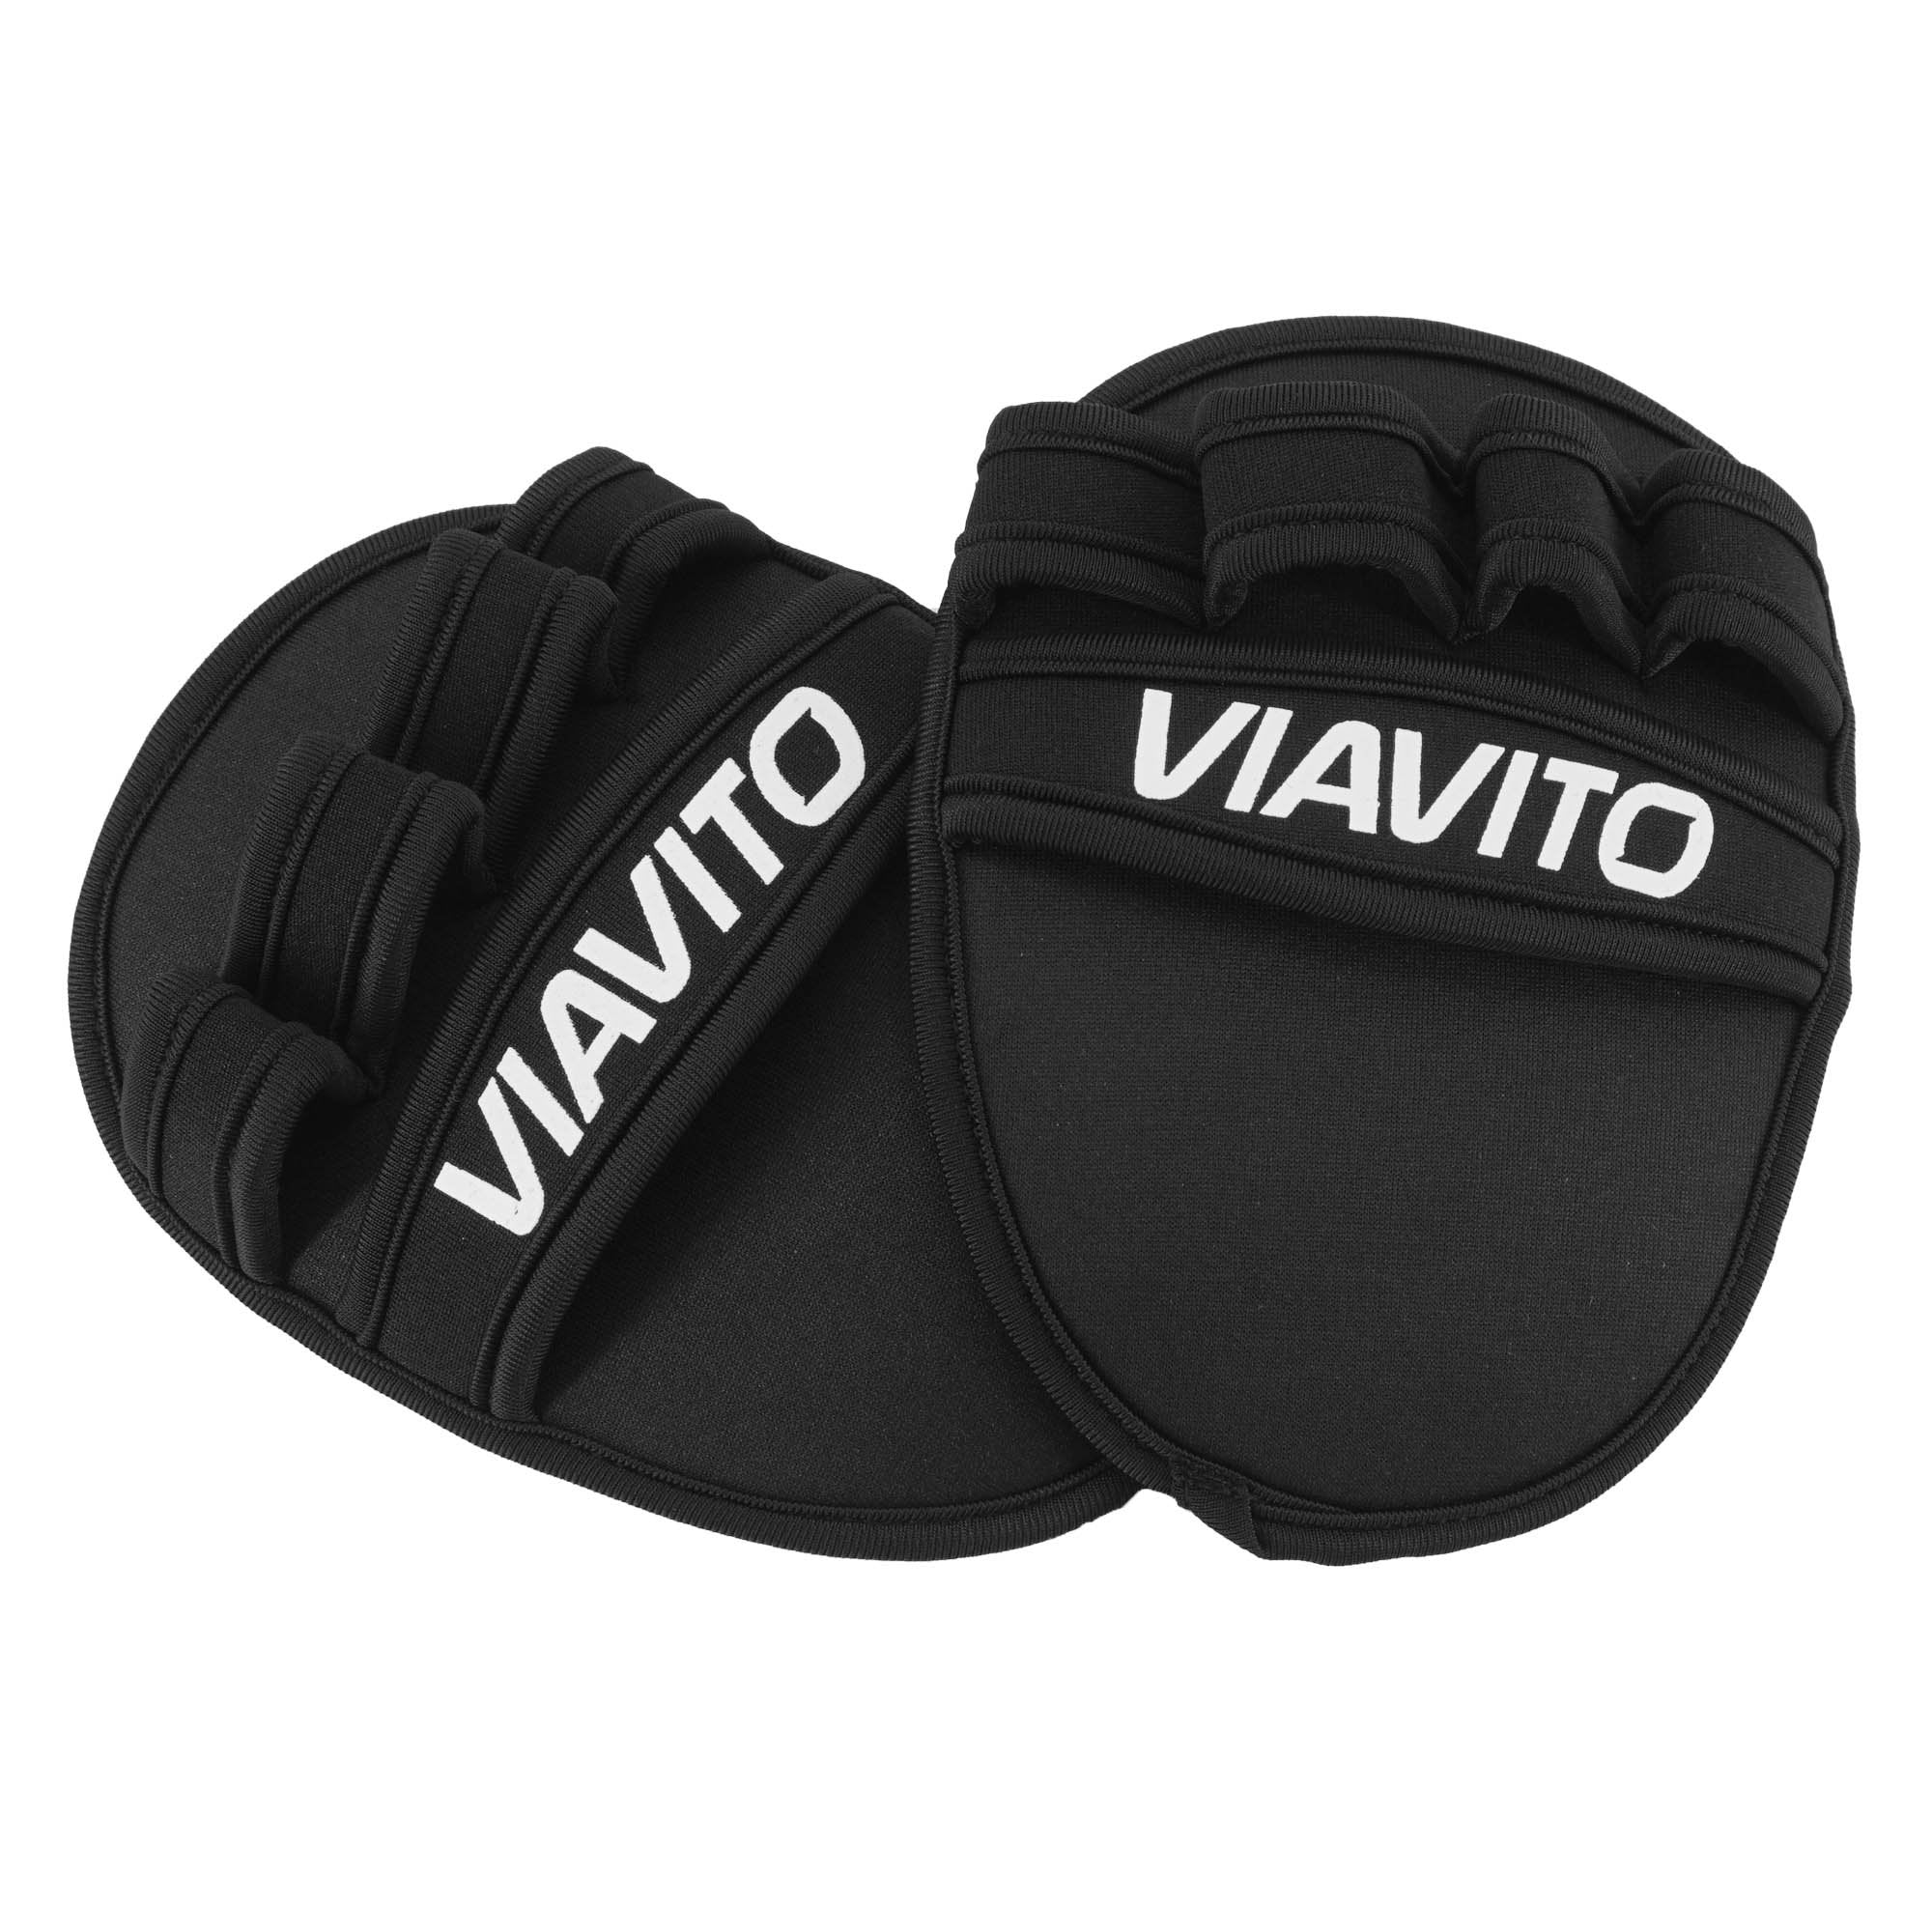 Viavito Weightlifting Grip Pads